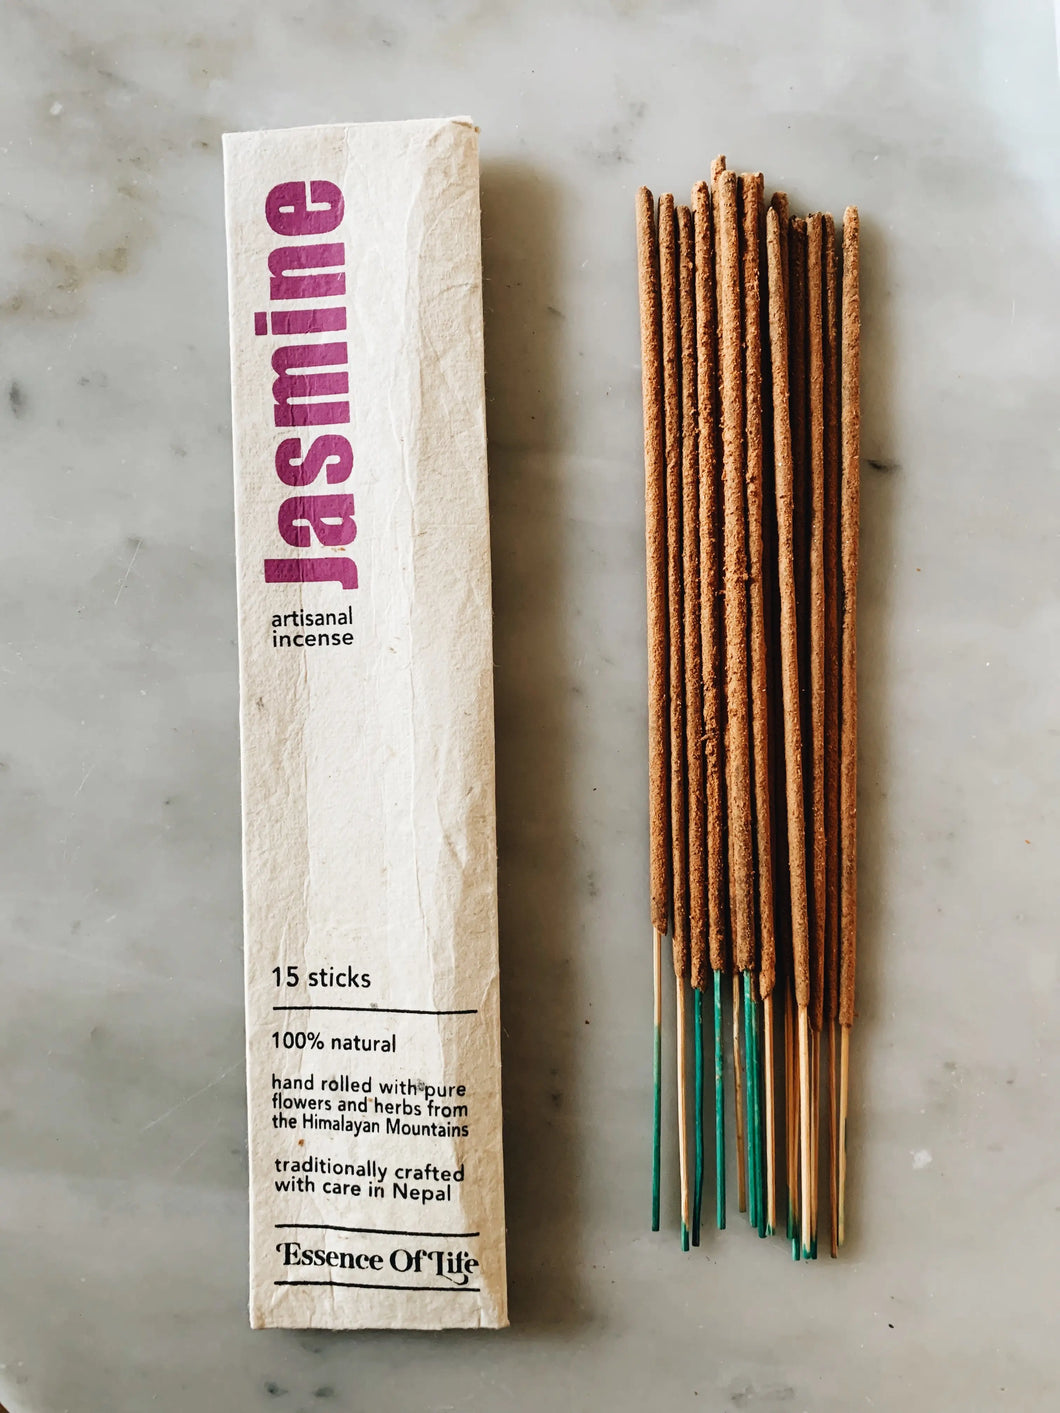 Jasmine Artisanal Incense Canada